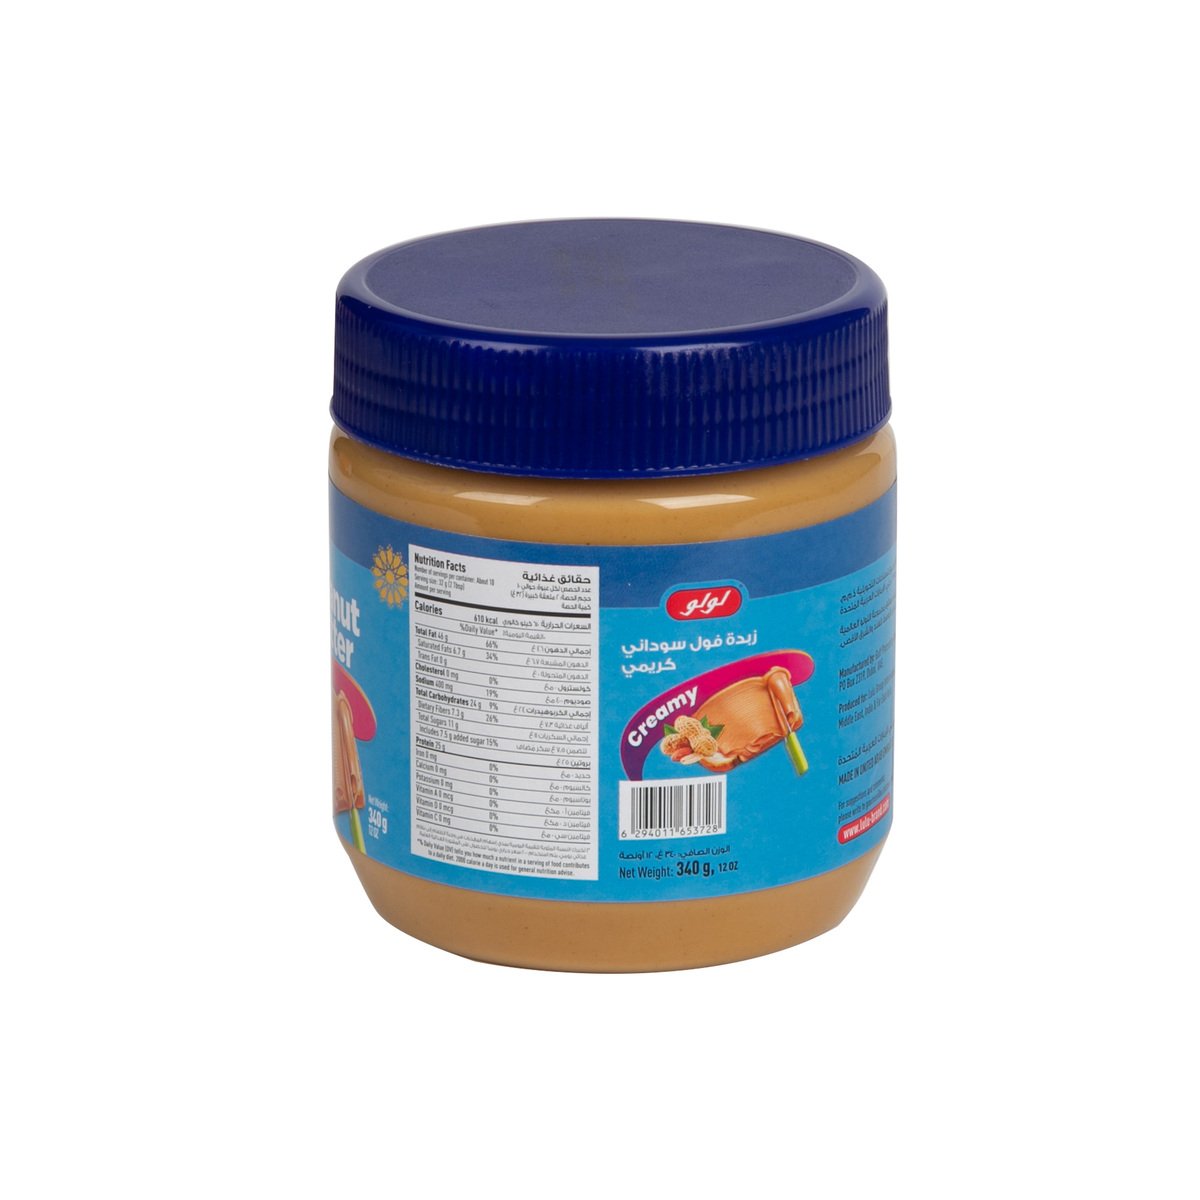 LuLu Creamy Peanut Butter 2 x 340 g